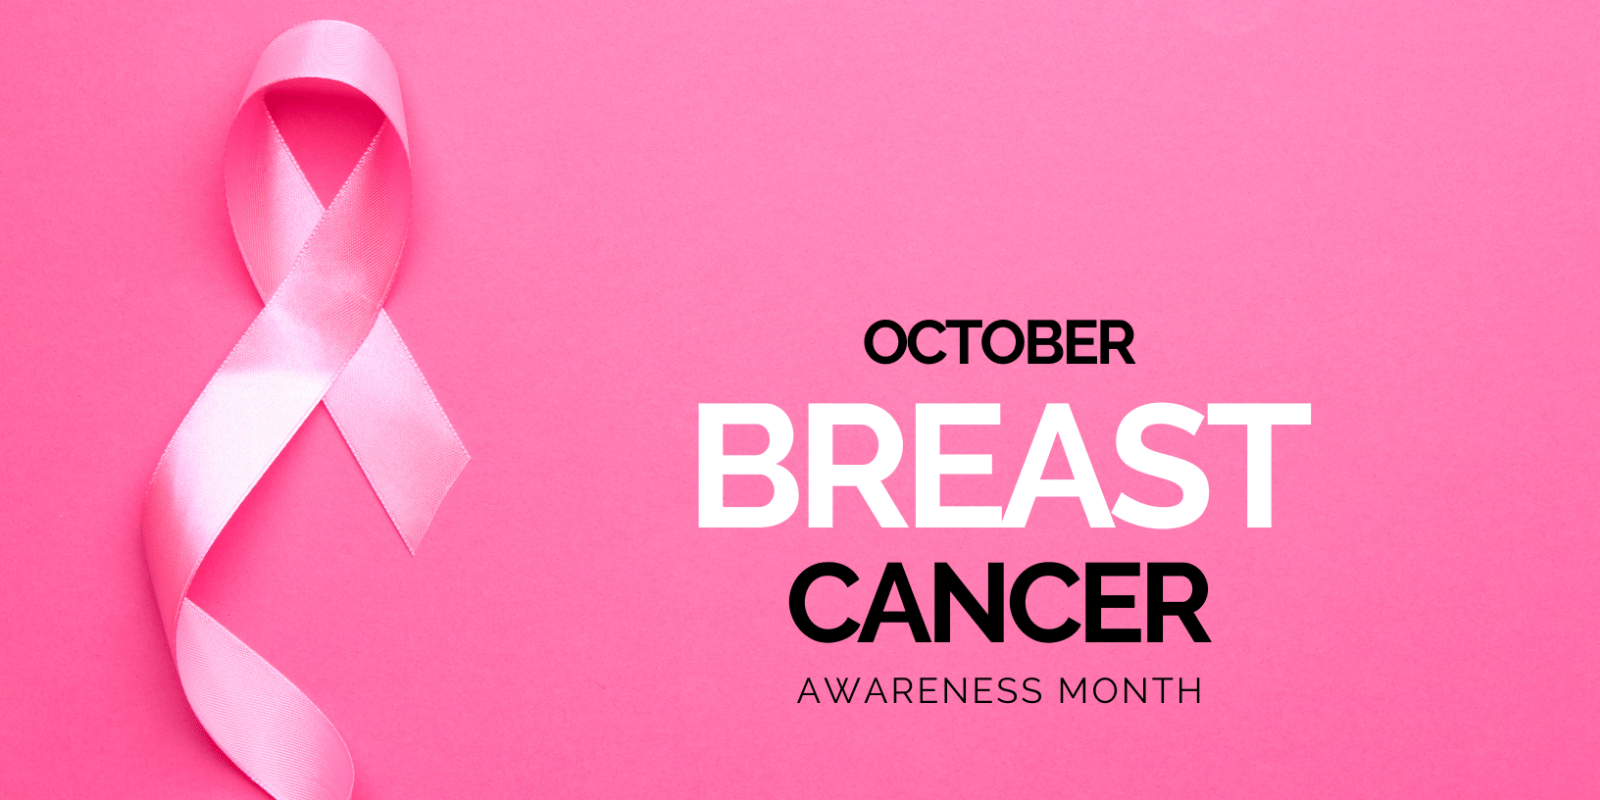 october breast cancer awareness month